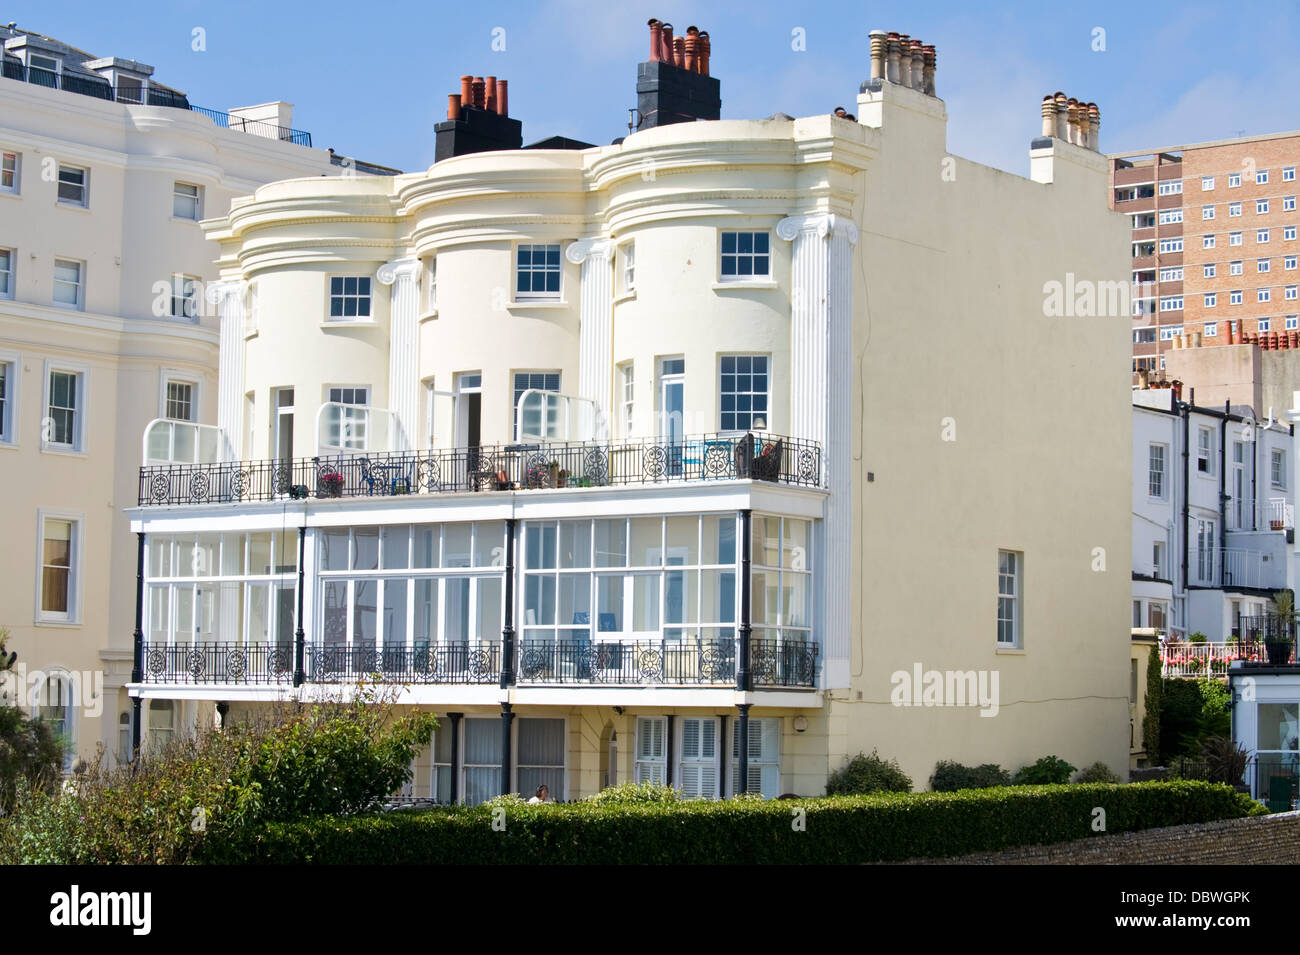 Exterior of Regency townhouses on Marine Parade Brighton East Sussex England UK Stock Photo